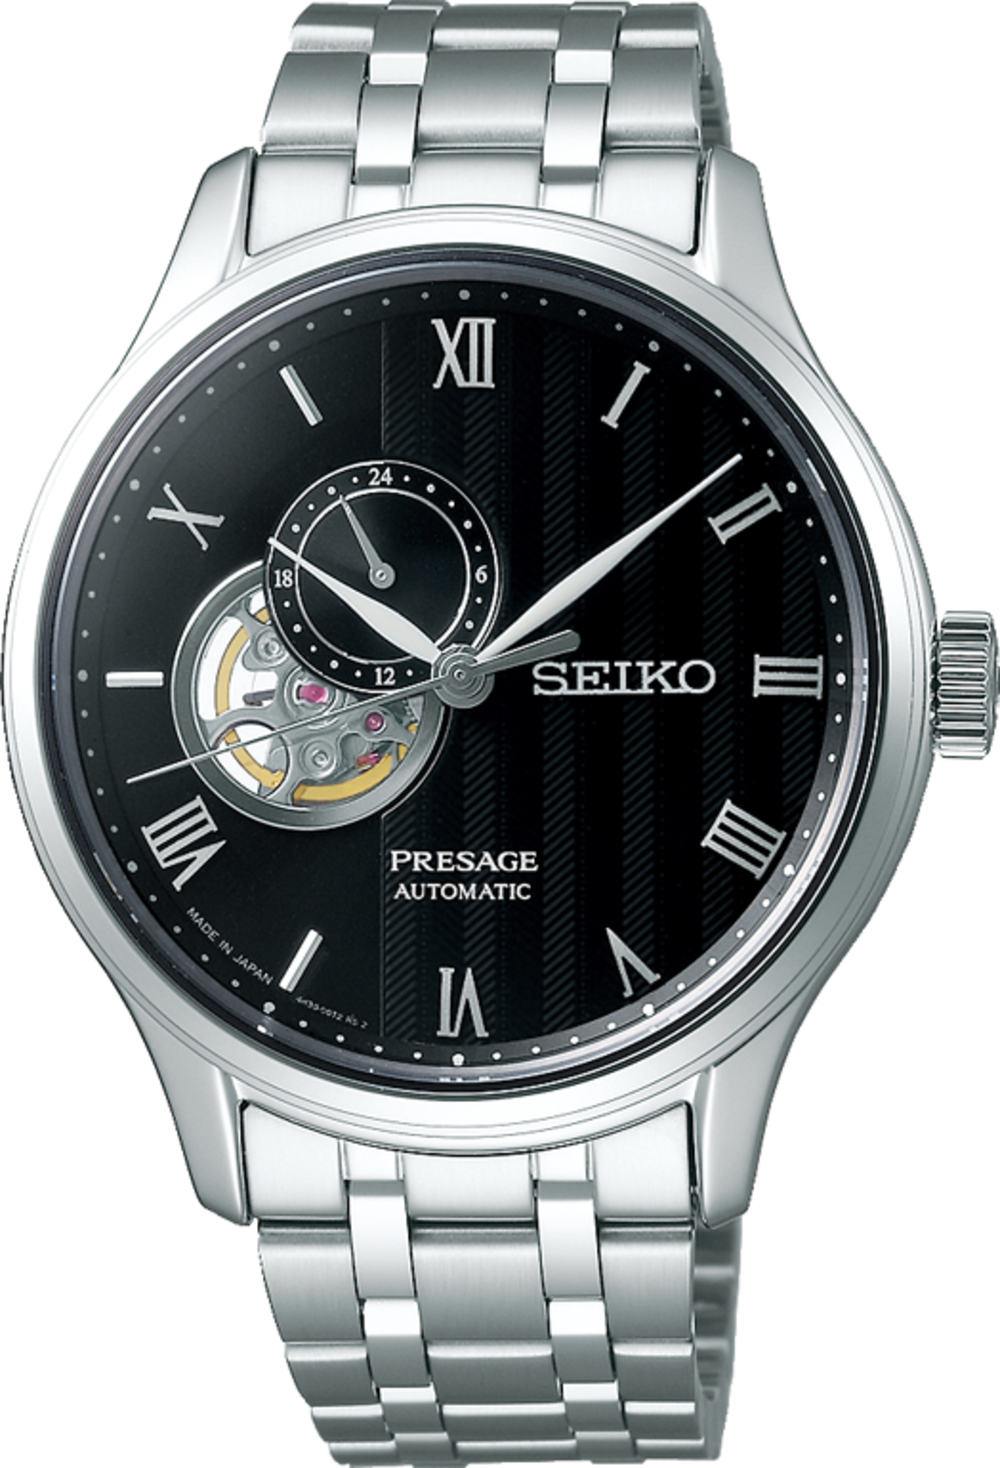 Seiko Men's Presage Watch in Silver | Angus & Coote